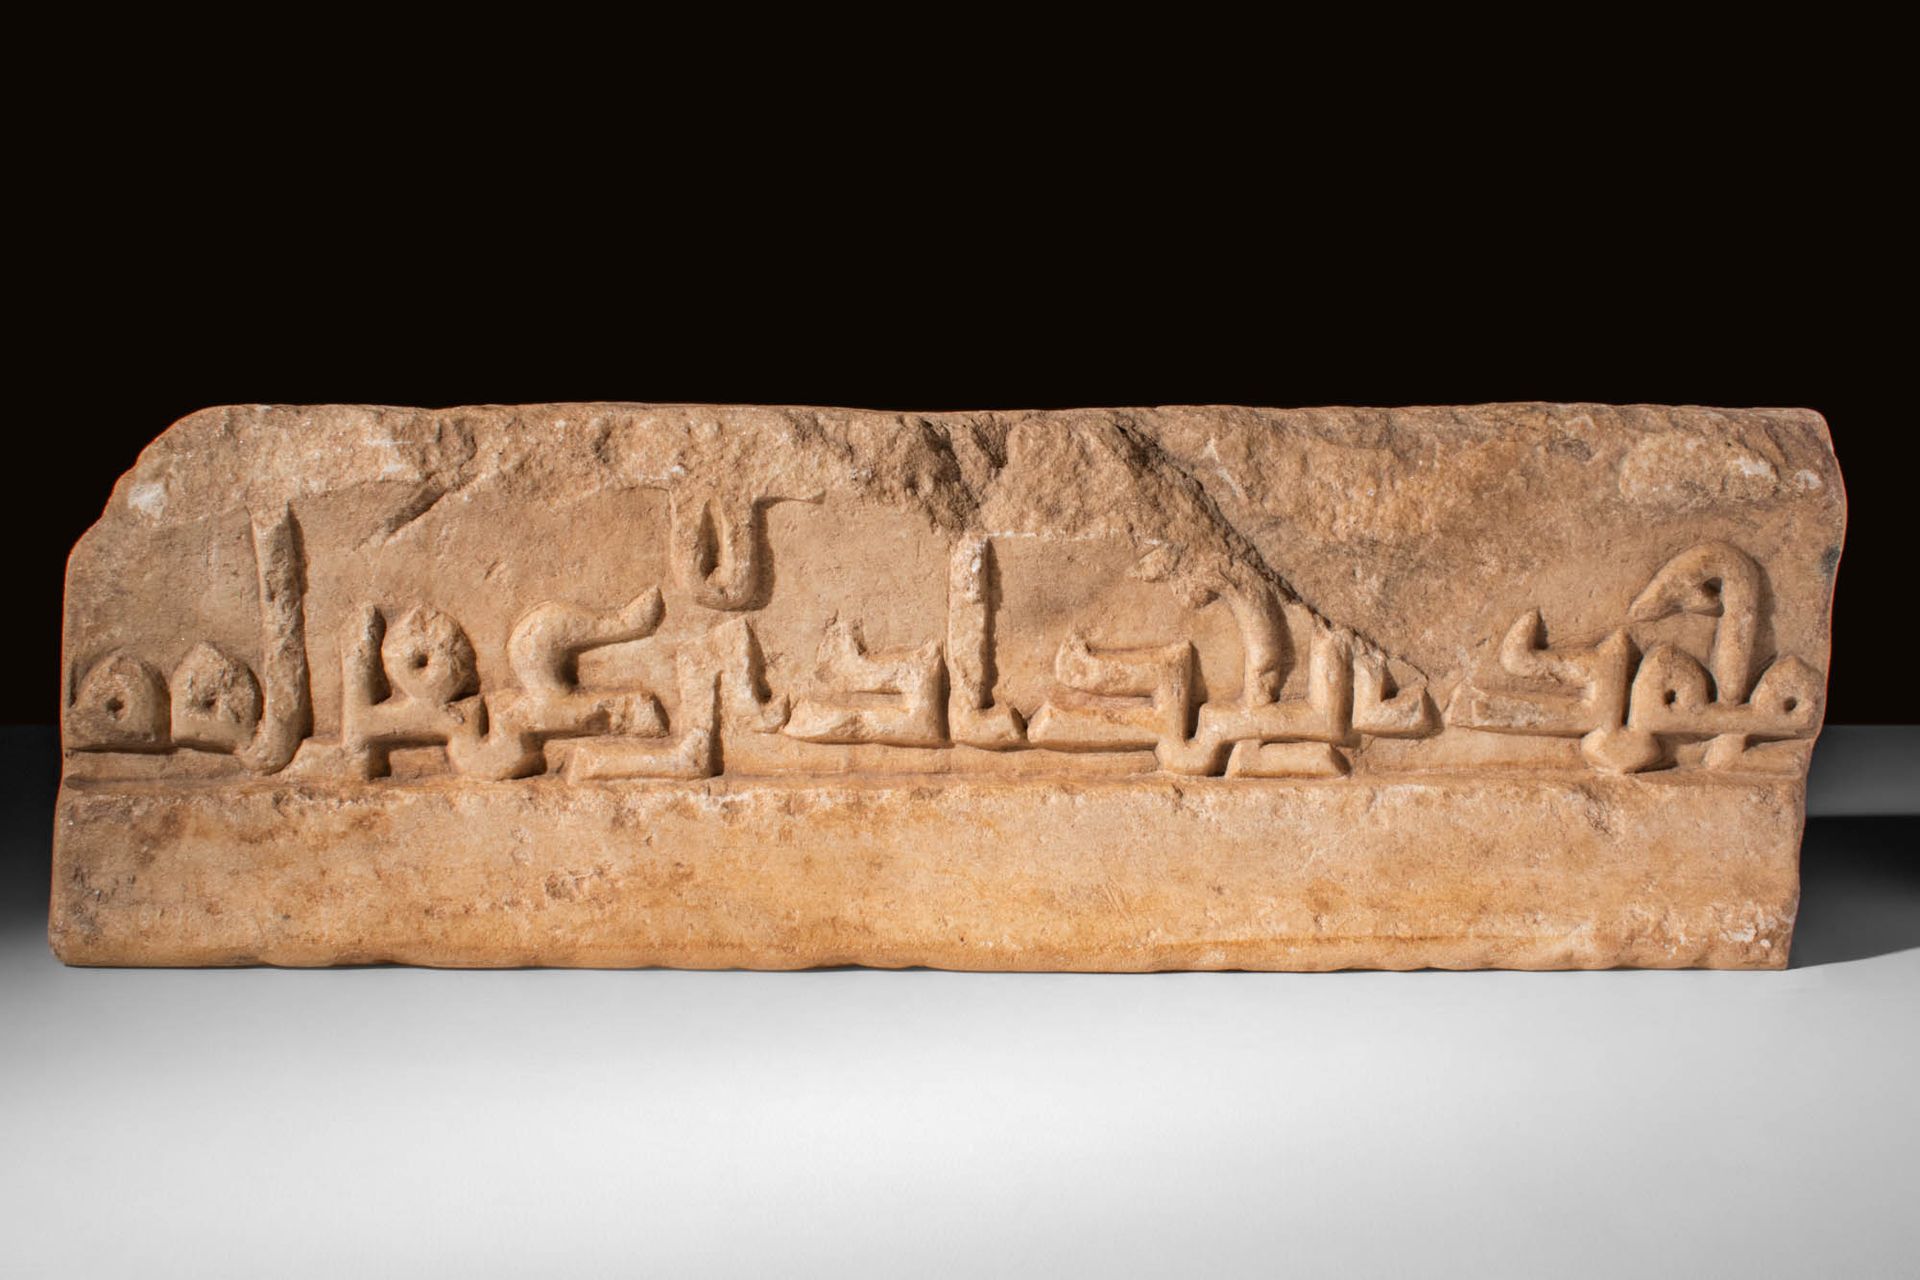 MEDIEVAL SELJUK ARCHITECTURAL INSCRIPTION Ca. AD 1100 - 1300.
Eine riesige selds&hellip;